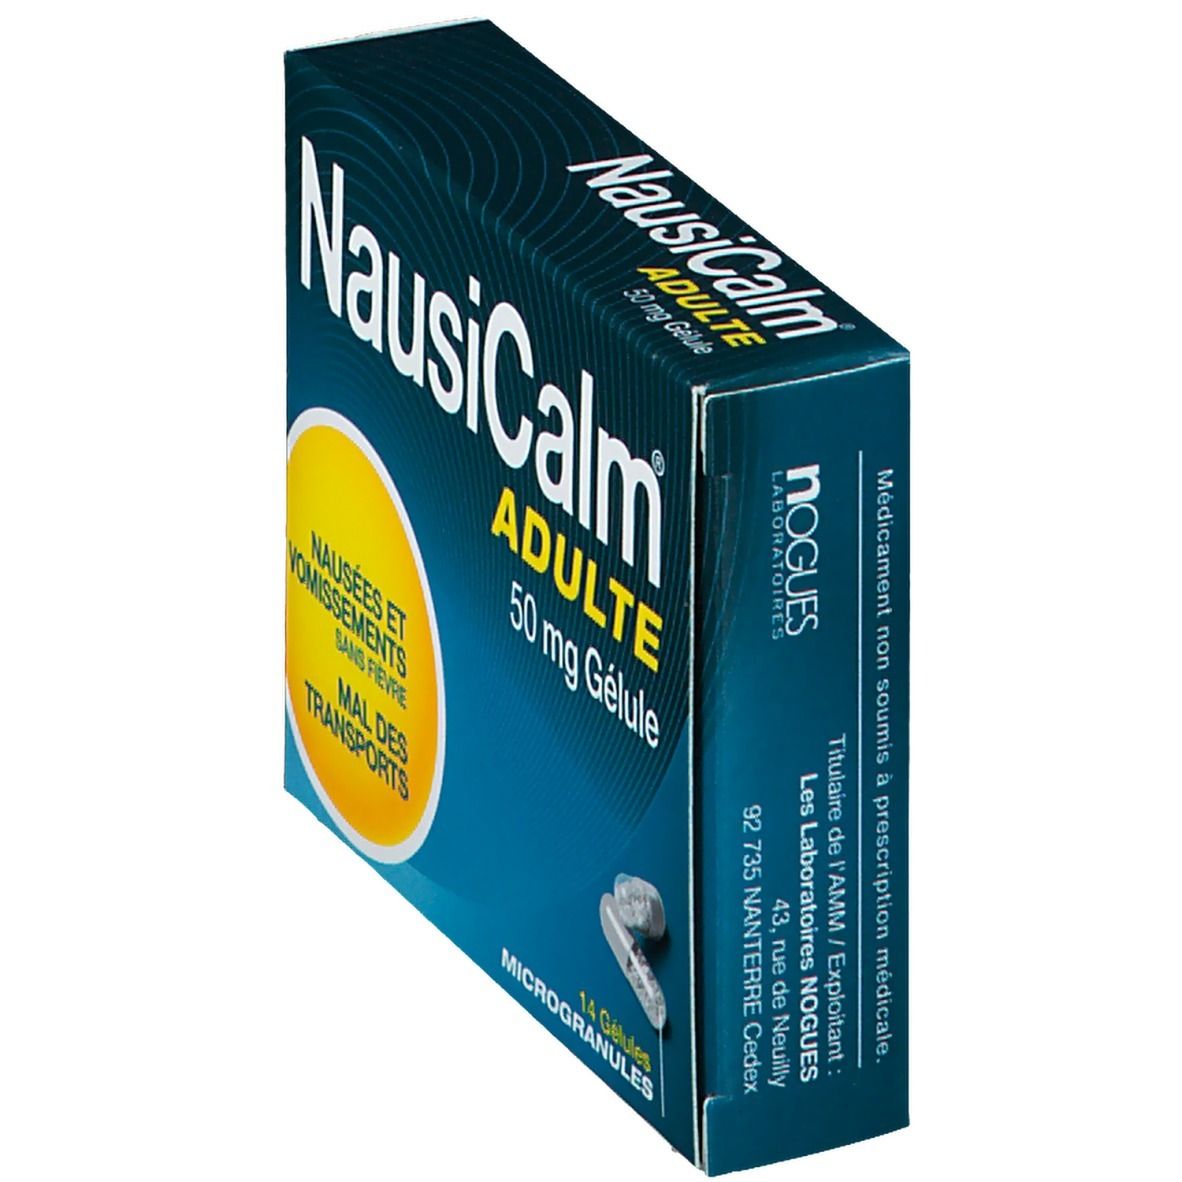 NausiCalm® Adulte 50 mg